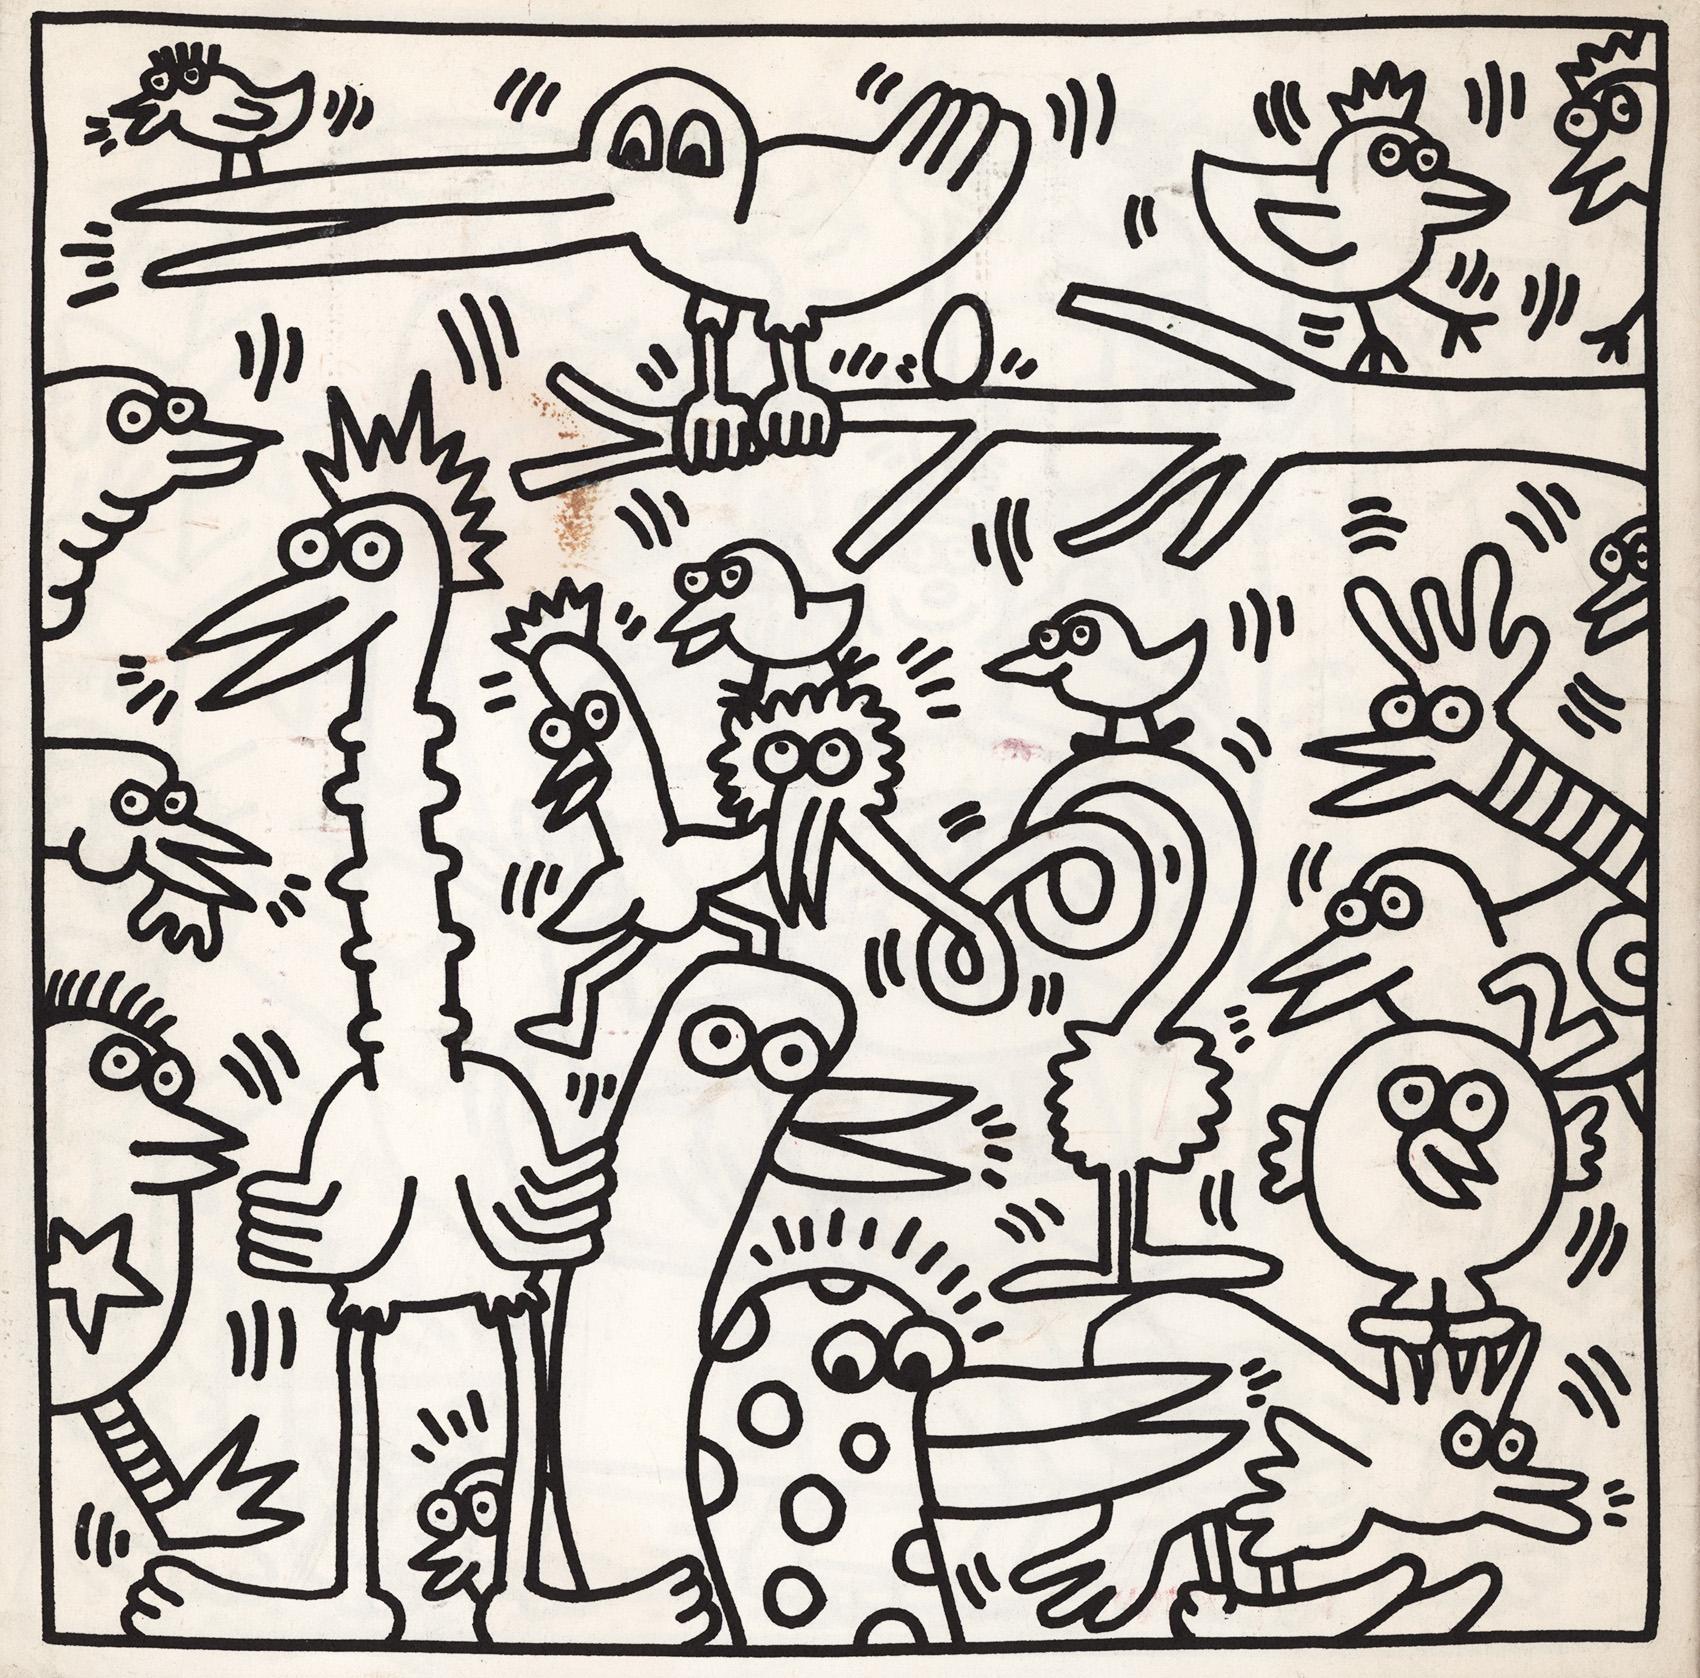 Keith Haring coloring book 1986 (Keith Haring Pop Shop 1986) 3